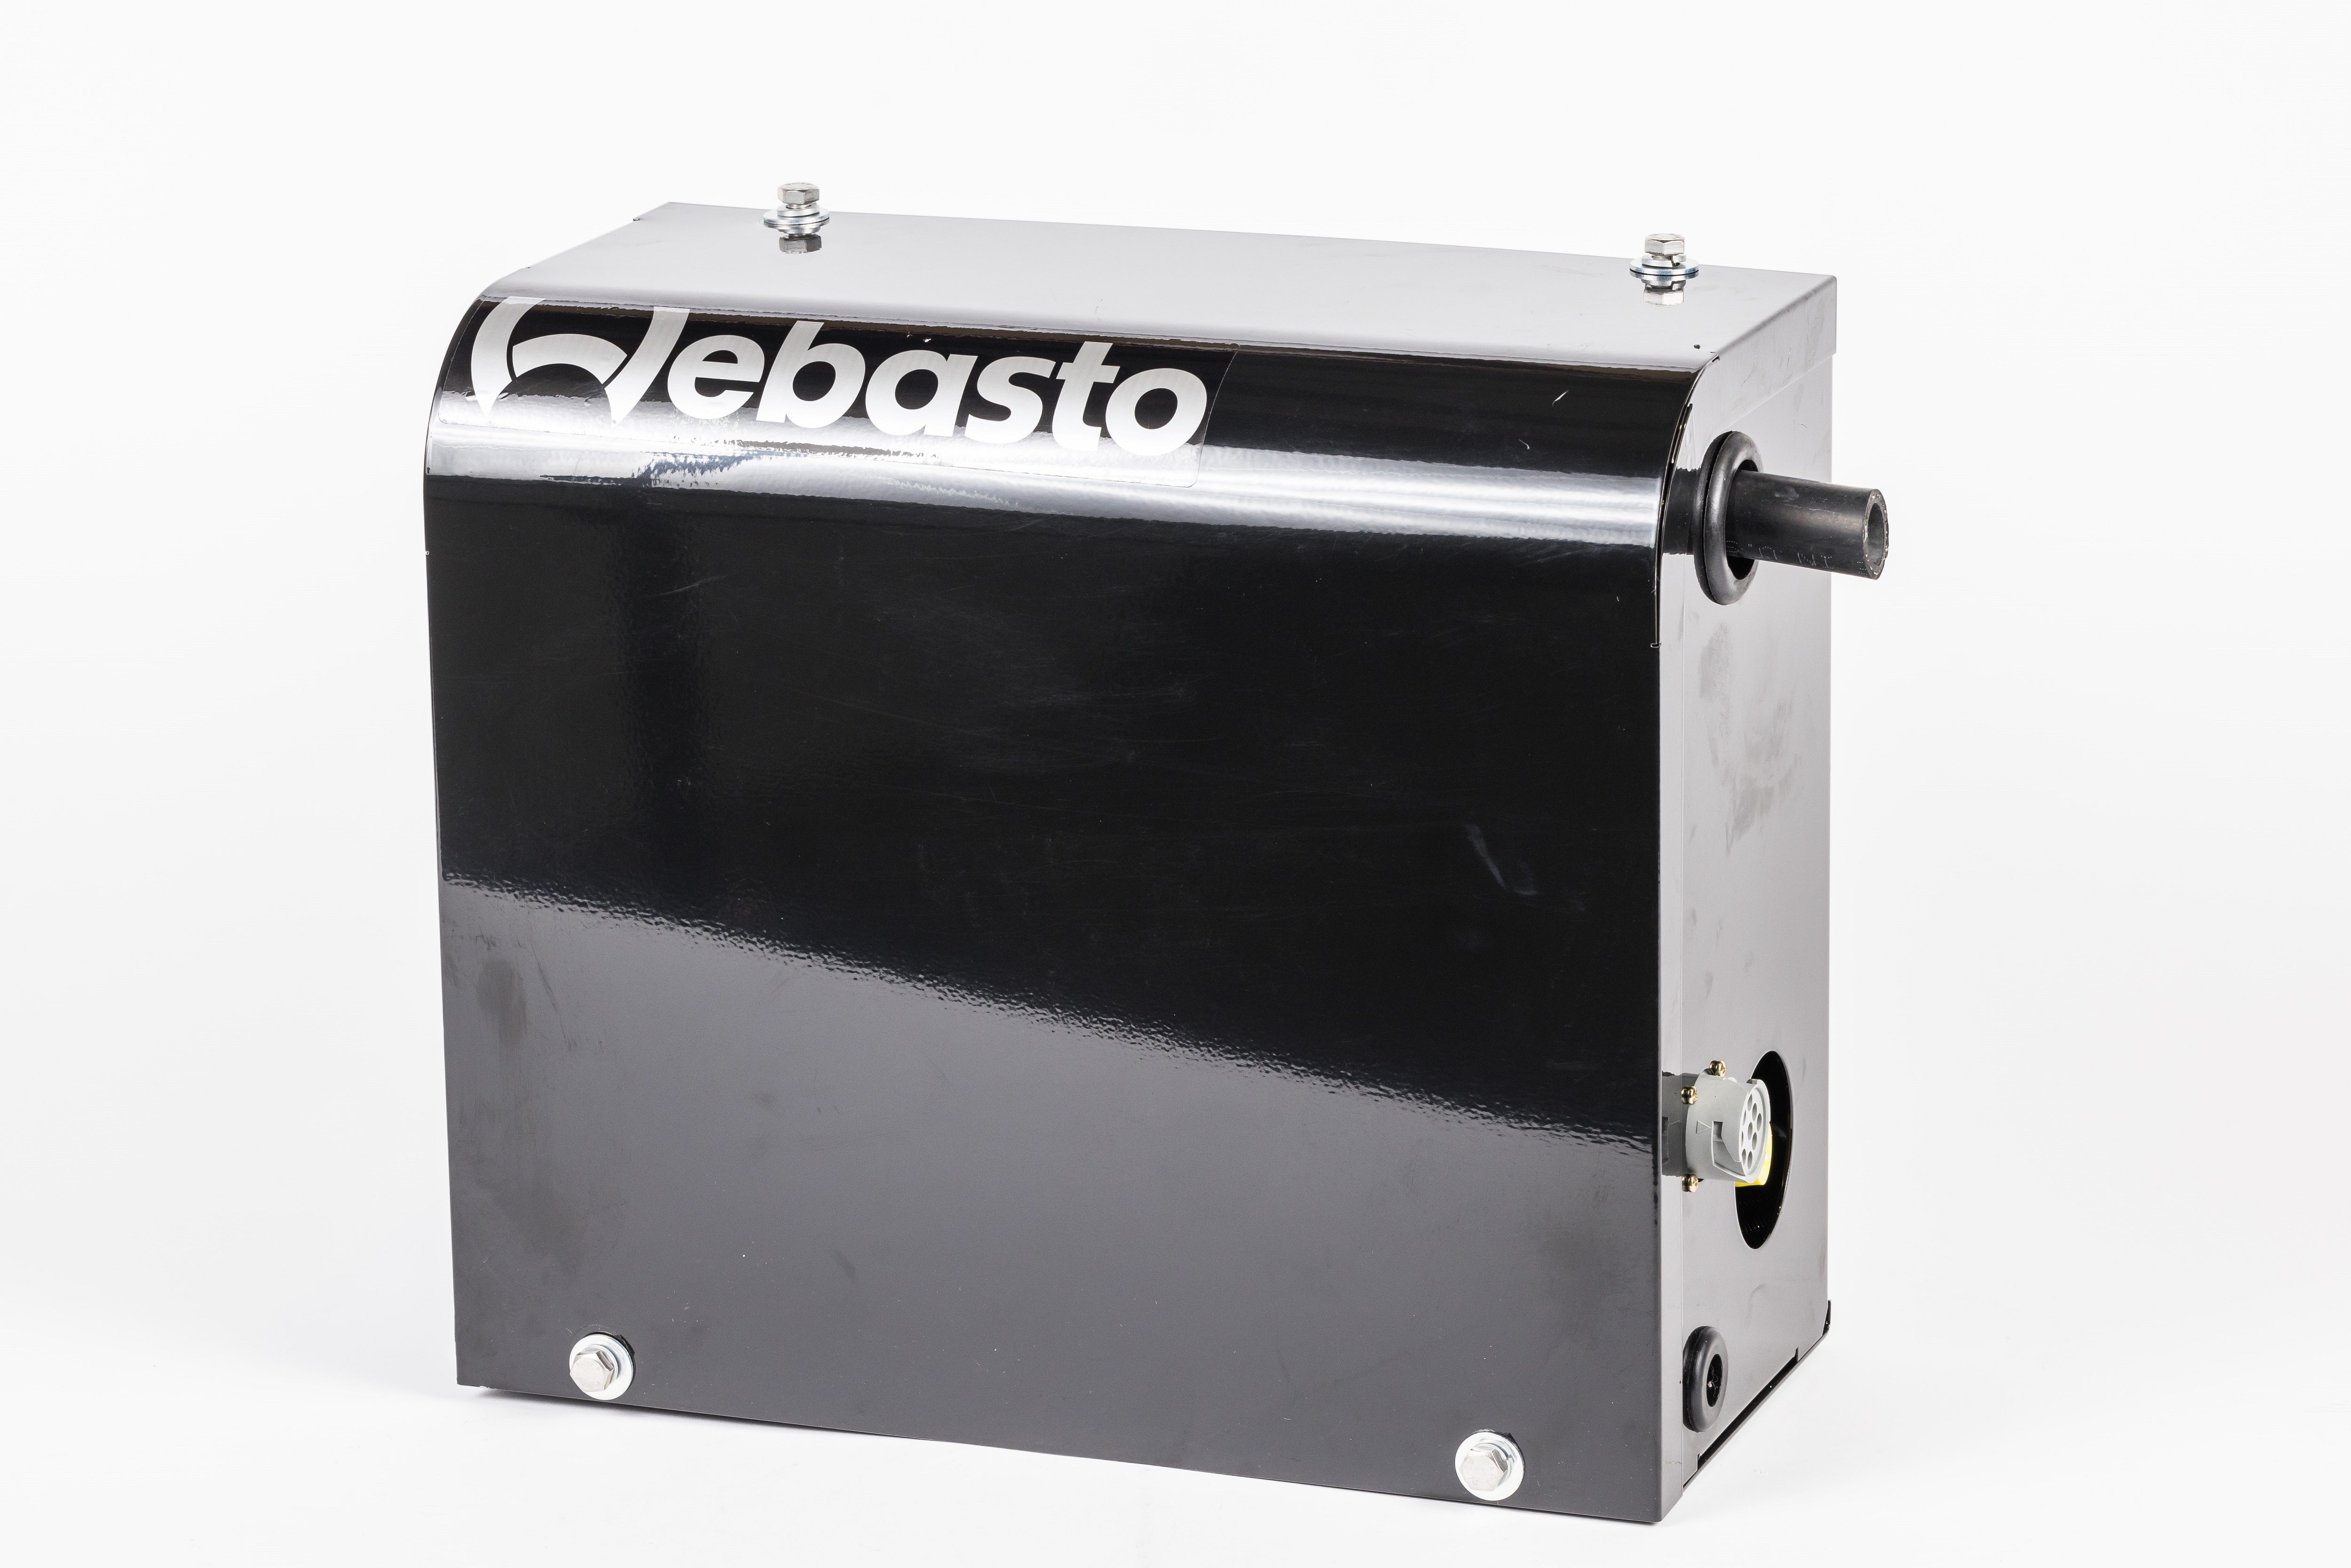 Webasto Thermo Pro 90 24V Coolant Heater Enclosure Box Kit 5010873A